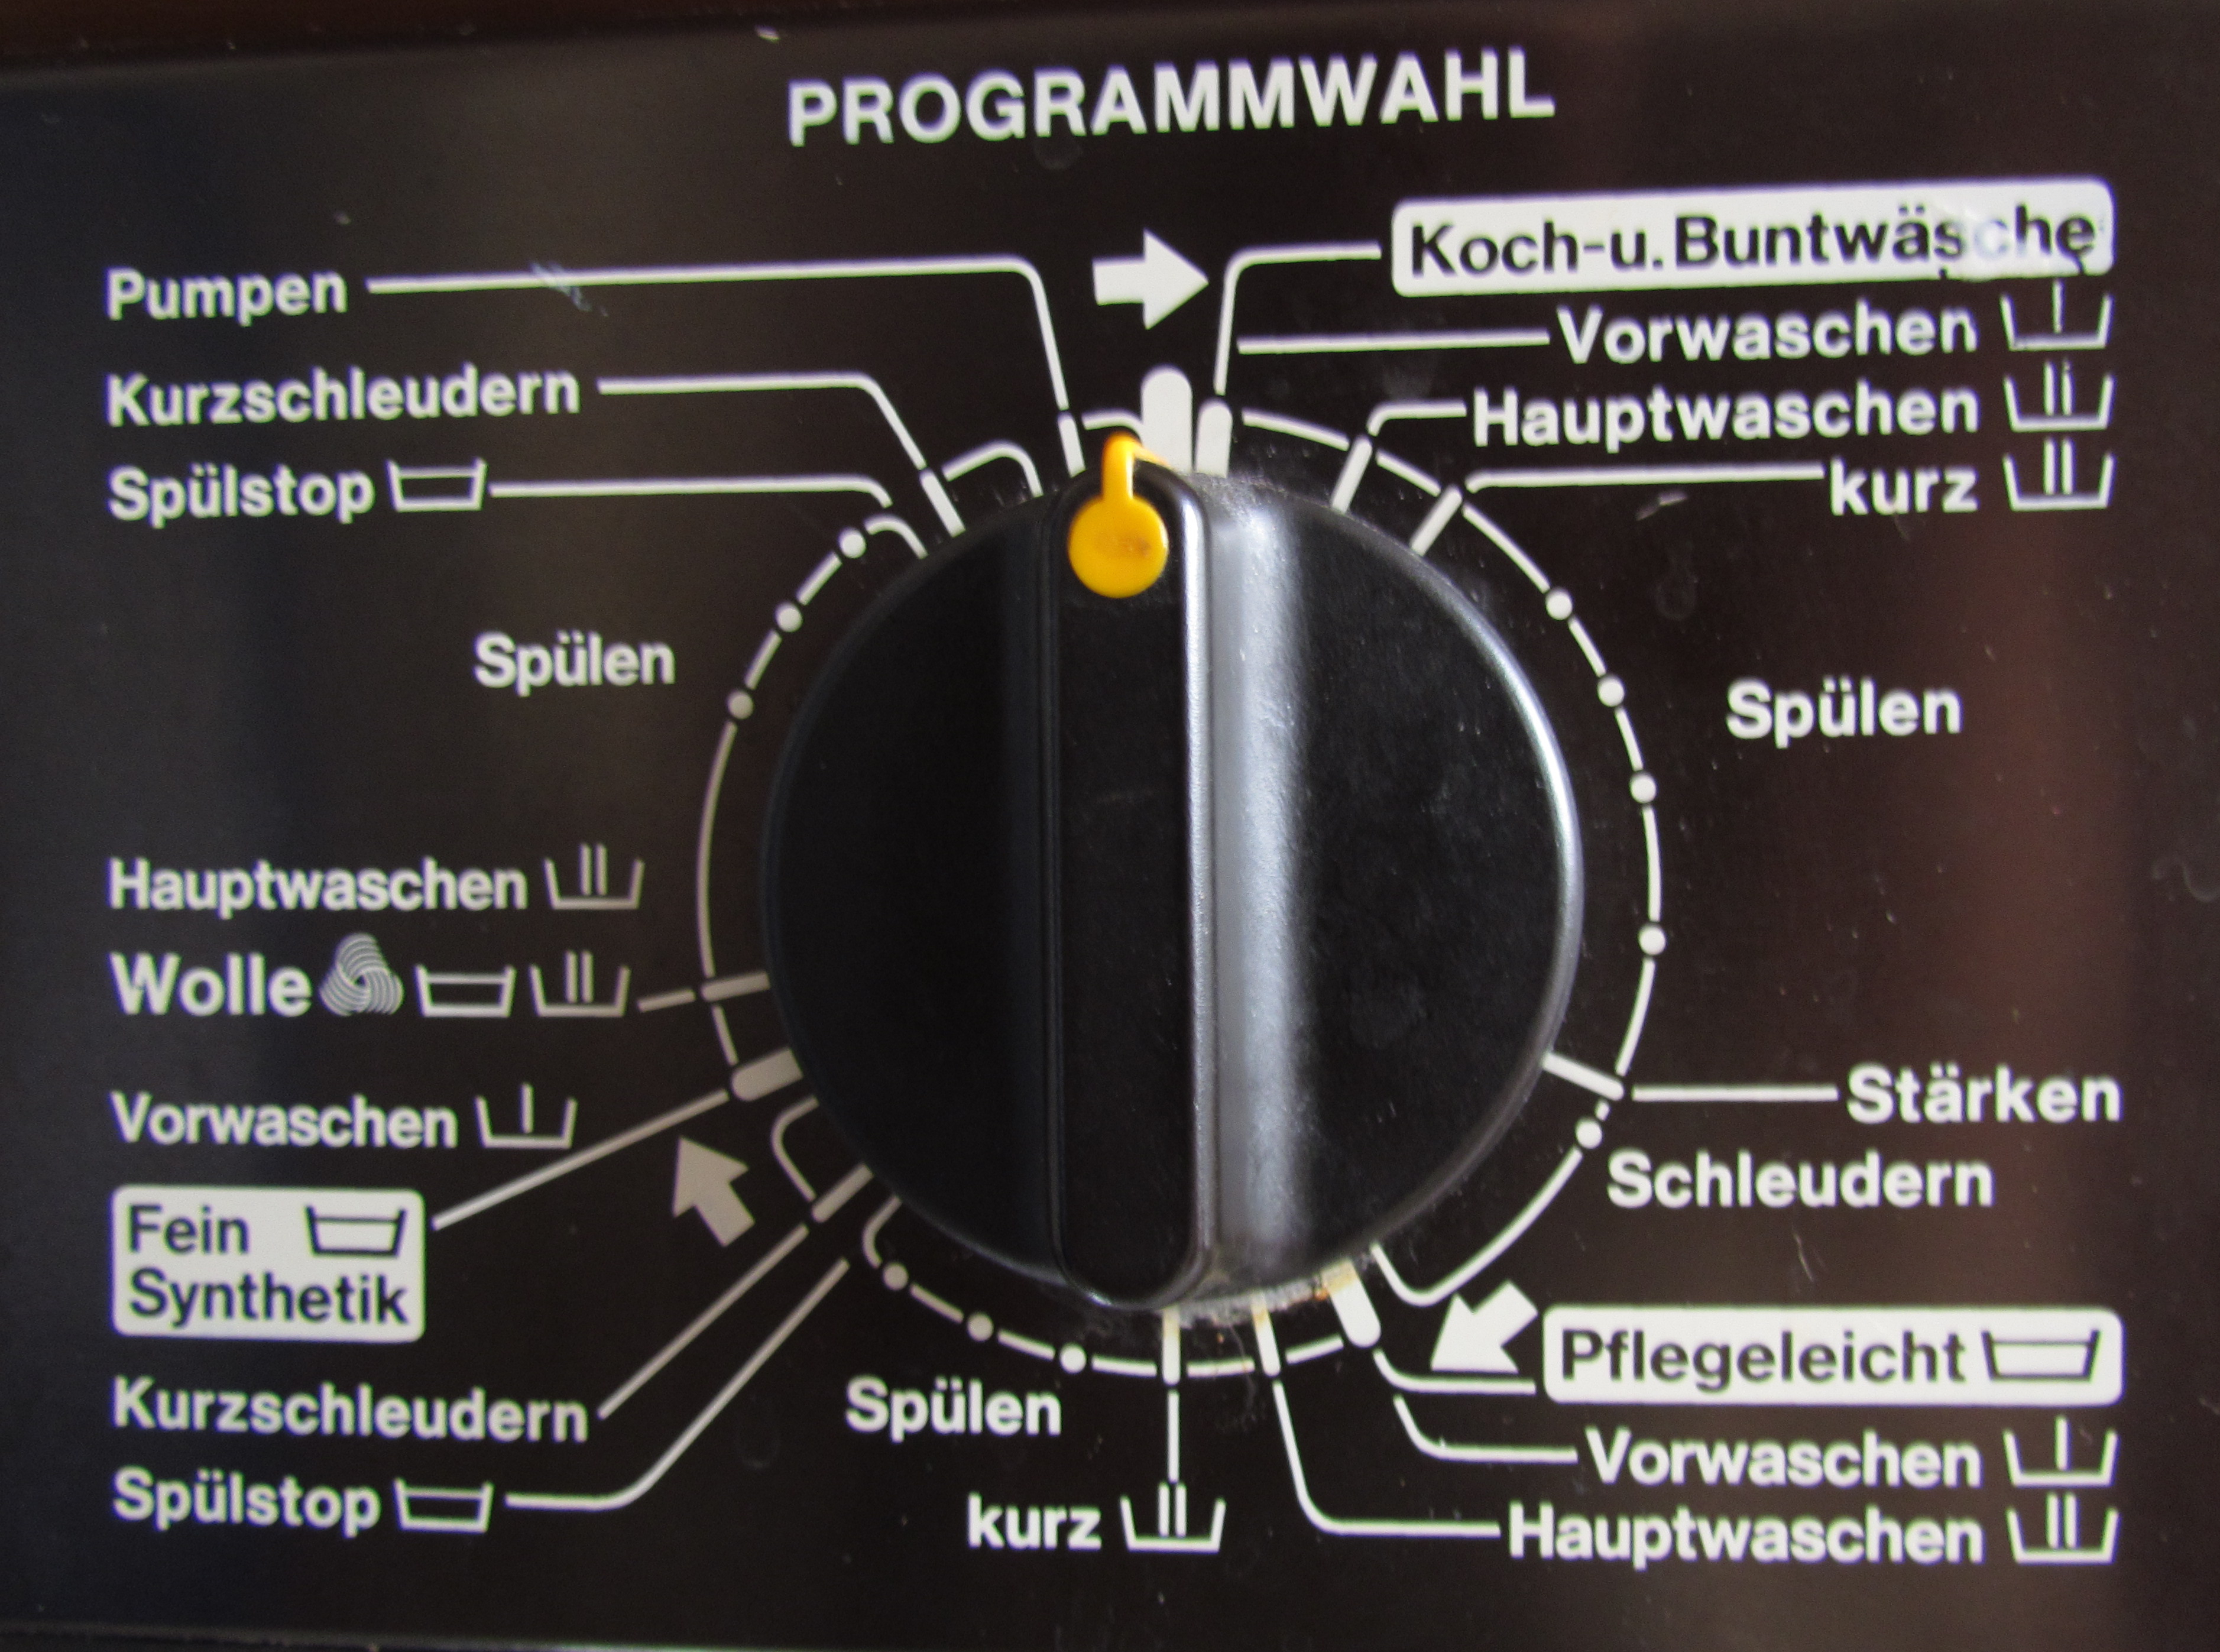 https://upload.wikimedia.org/wikipedia/commons/2/2c/Drehknopf_Programm_an_einer_Waschmaschine_%28fcm%29.jpg